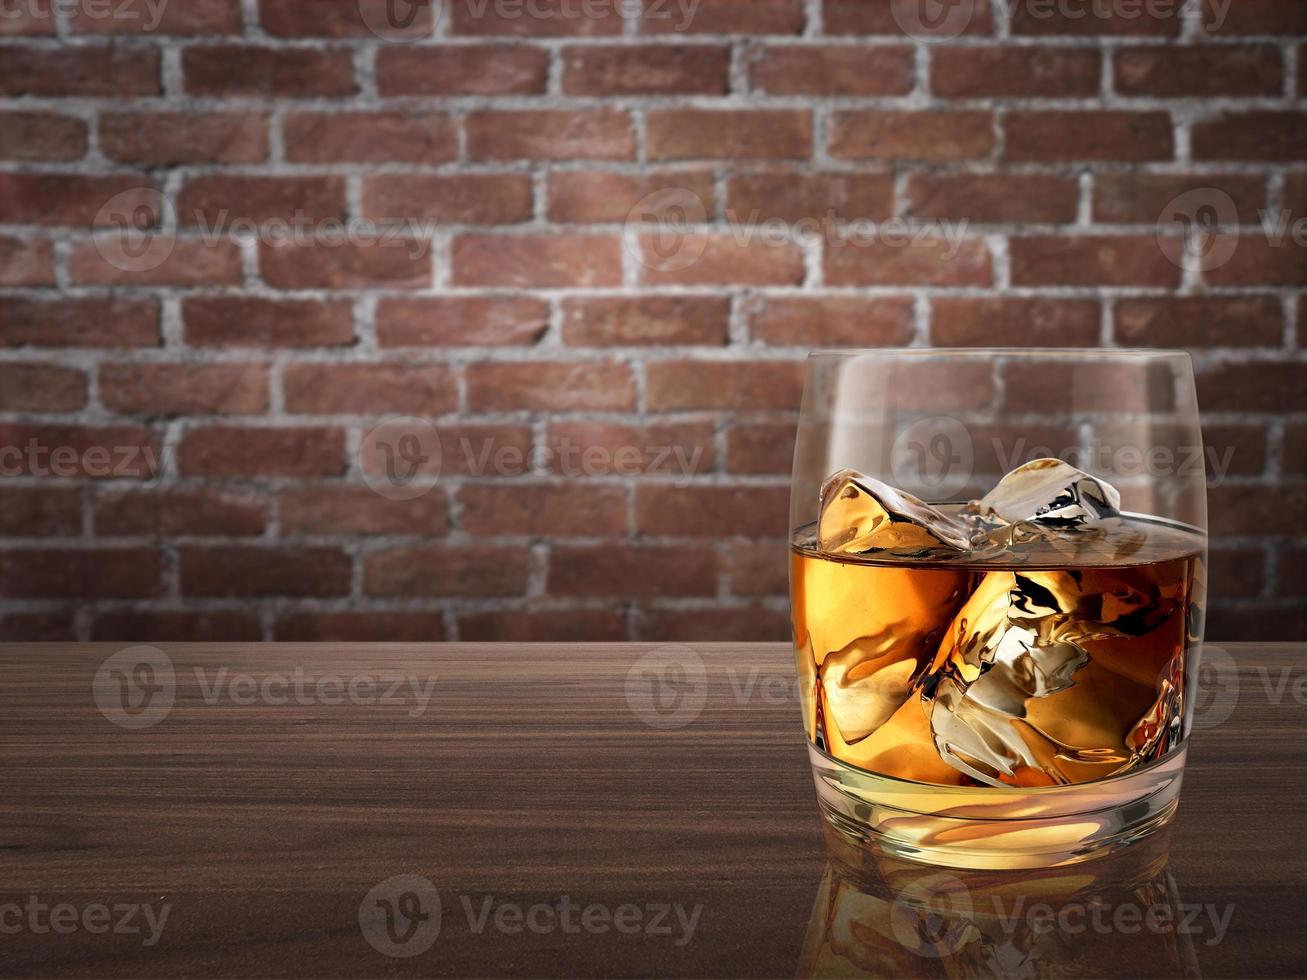 whiskyglas op houten teller rode baksteenachtergrond foto